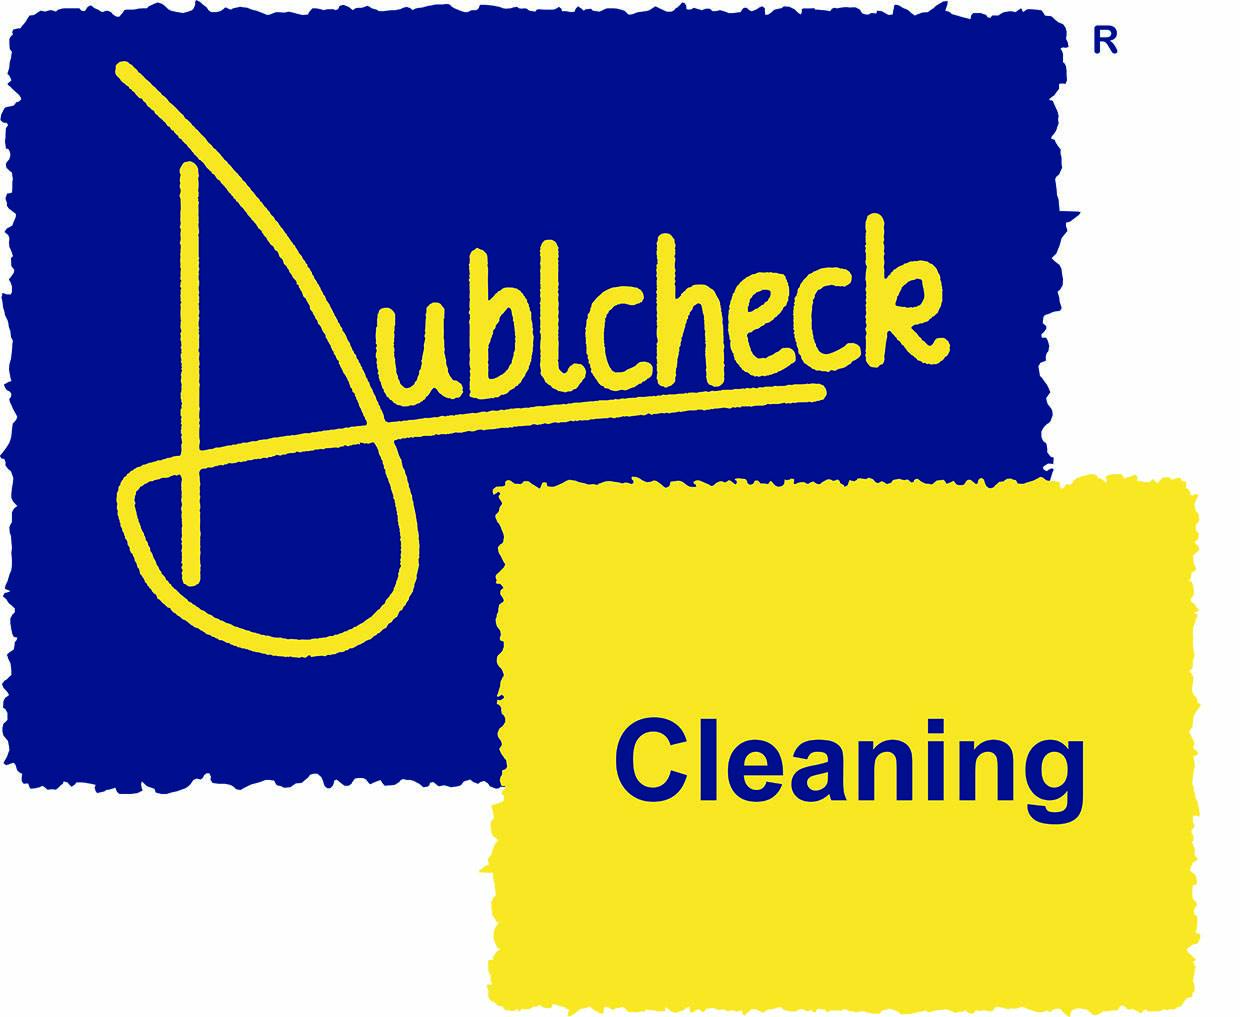 Dublcheck franchise logo